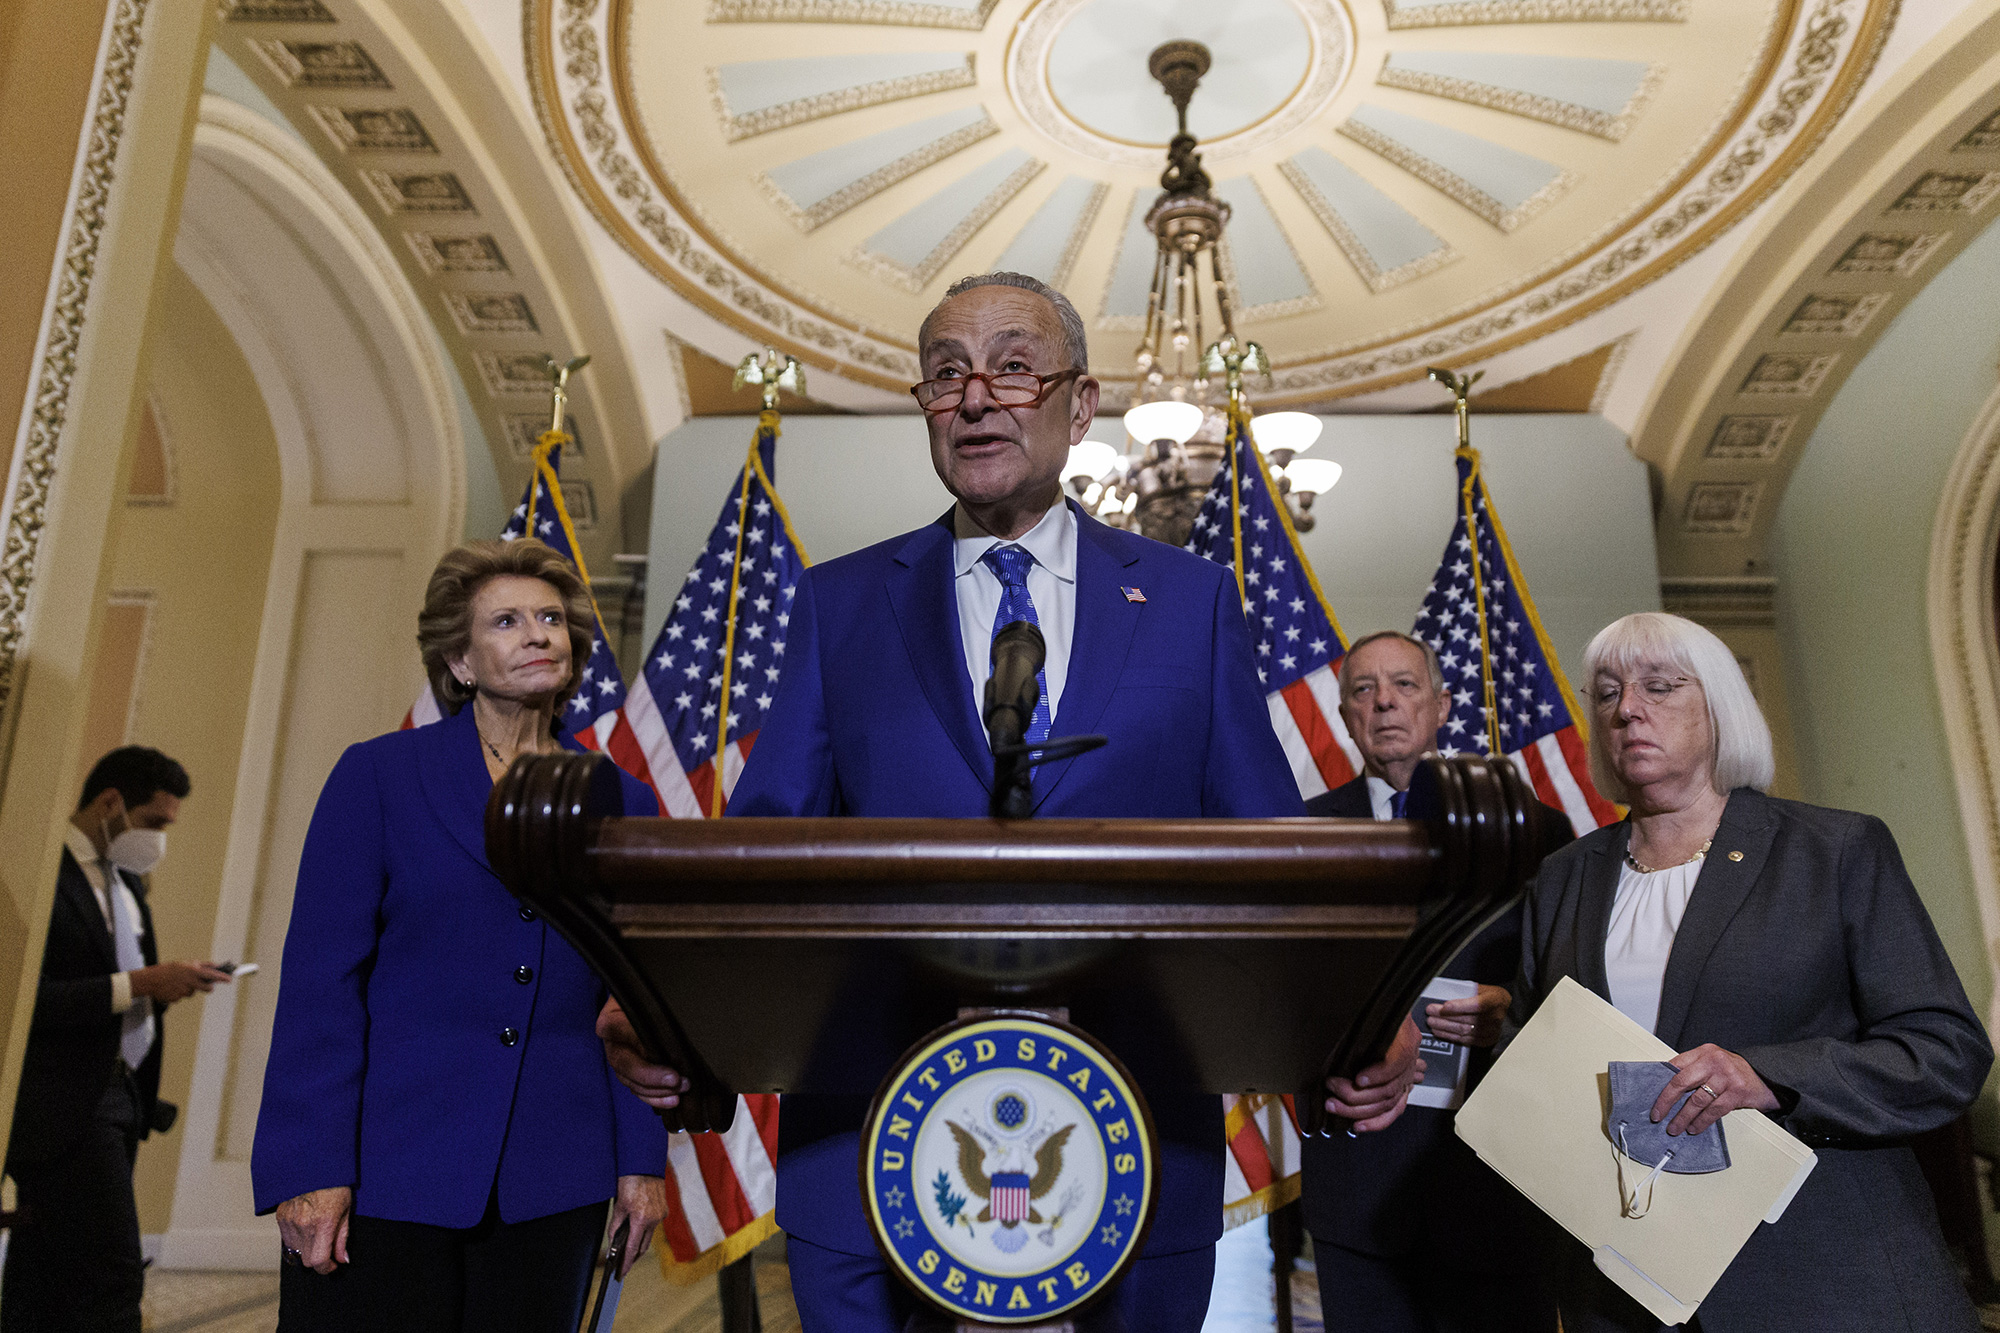 Senate Majority Leader Chuck Schumer speaks at the U.S. Capitol on Wednesday, June 22.